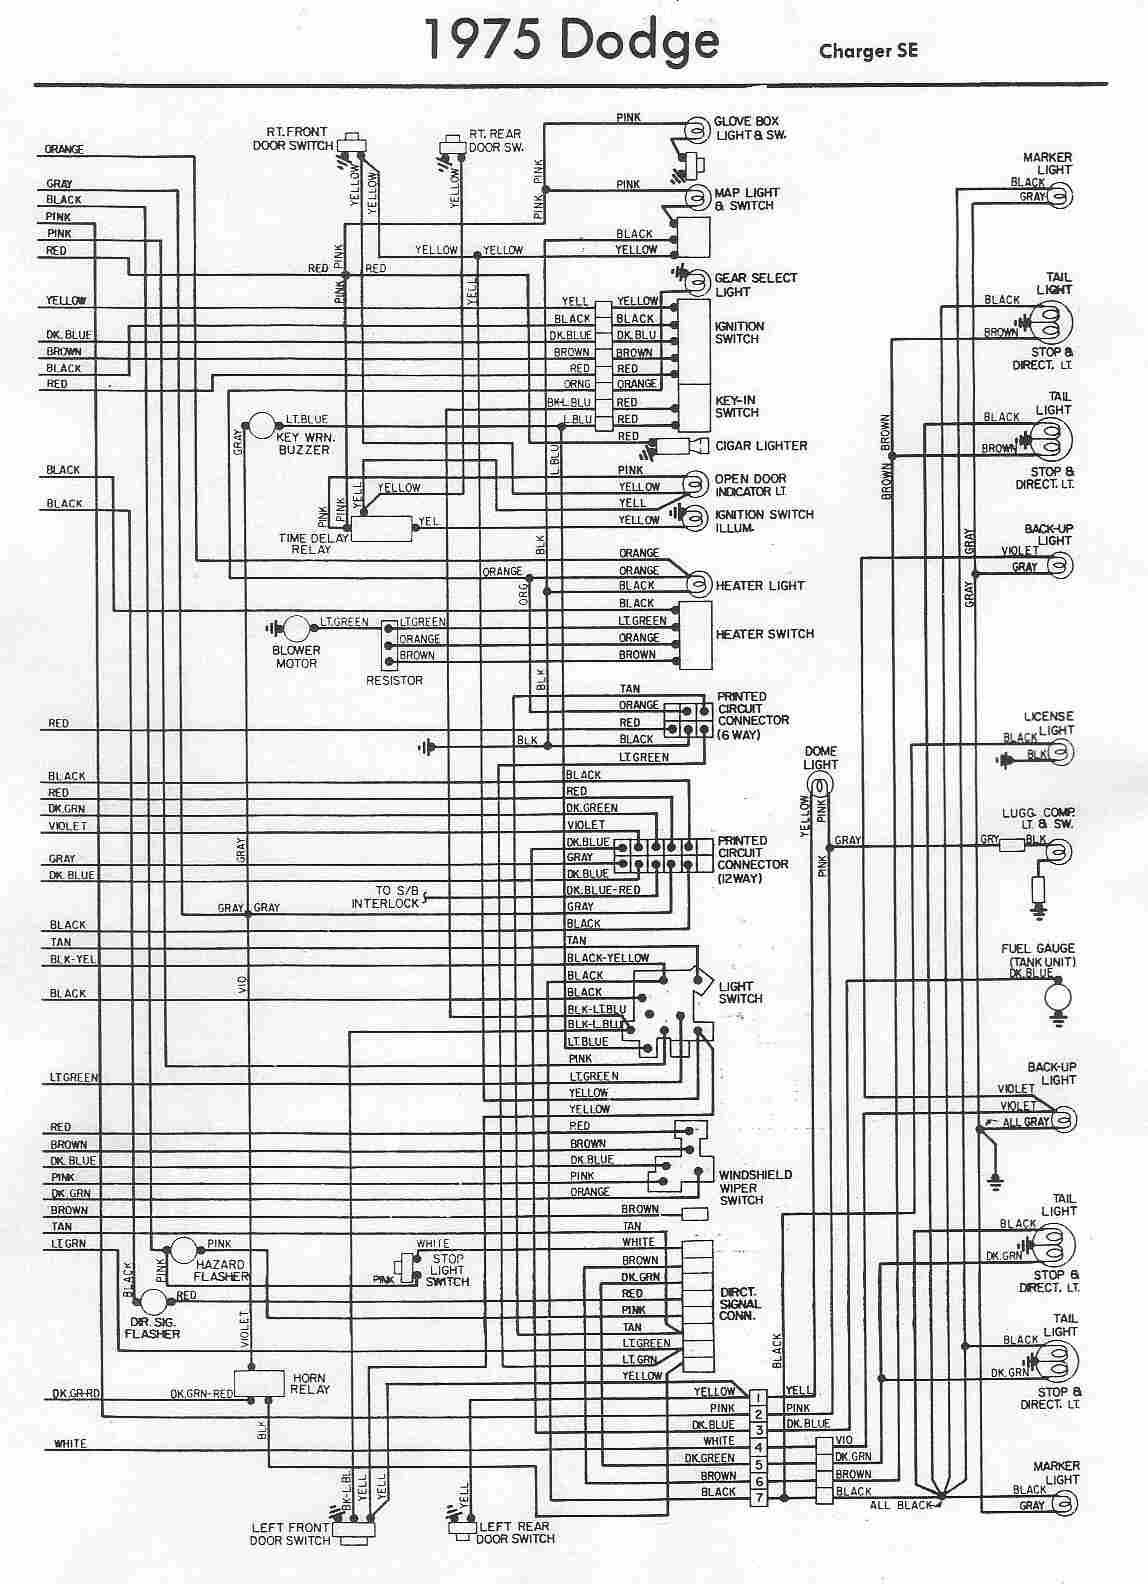 Dodge - car manuals, wiring diagrams PDF & fault codes ferrari car manuals wiring diagrams pdf 